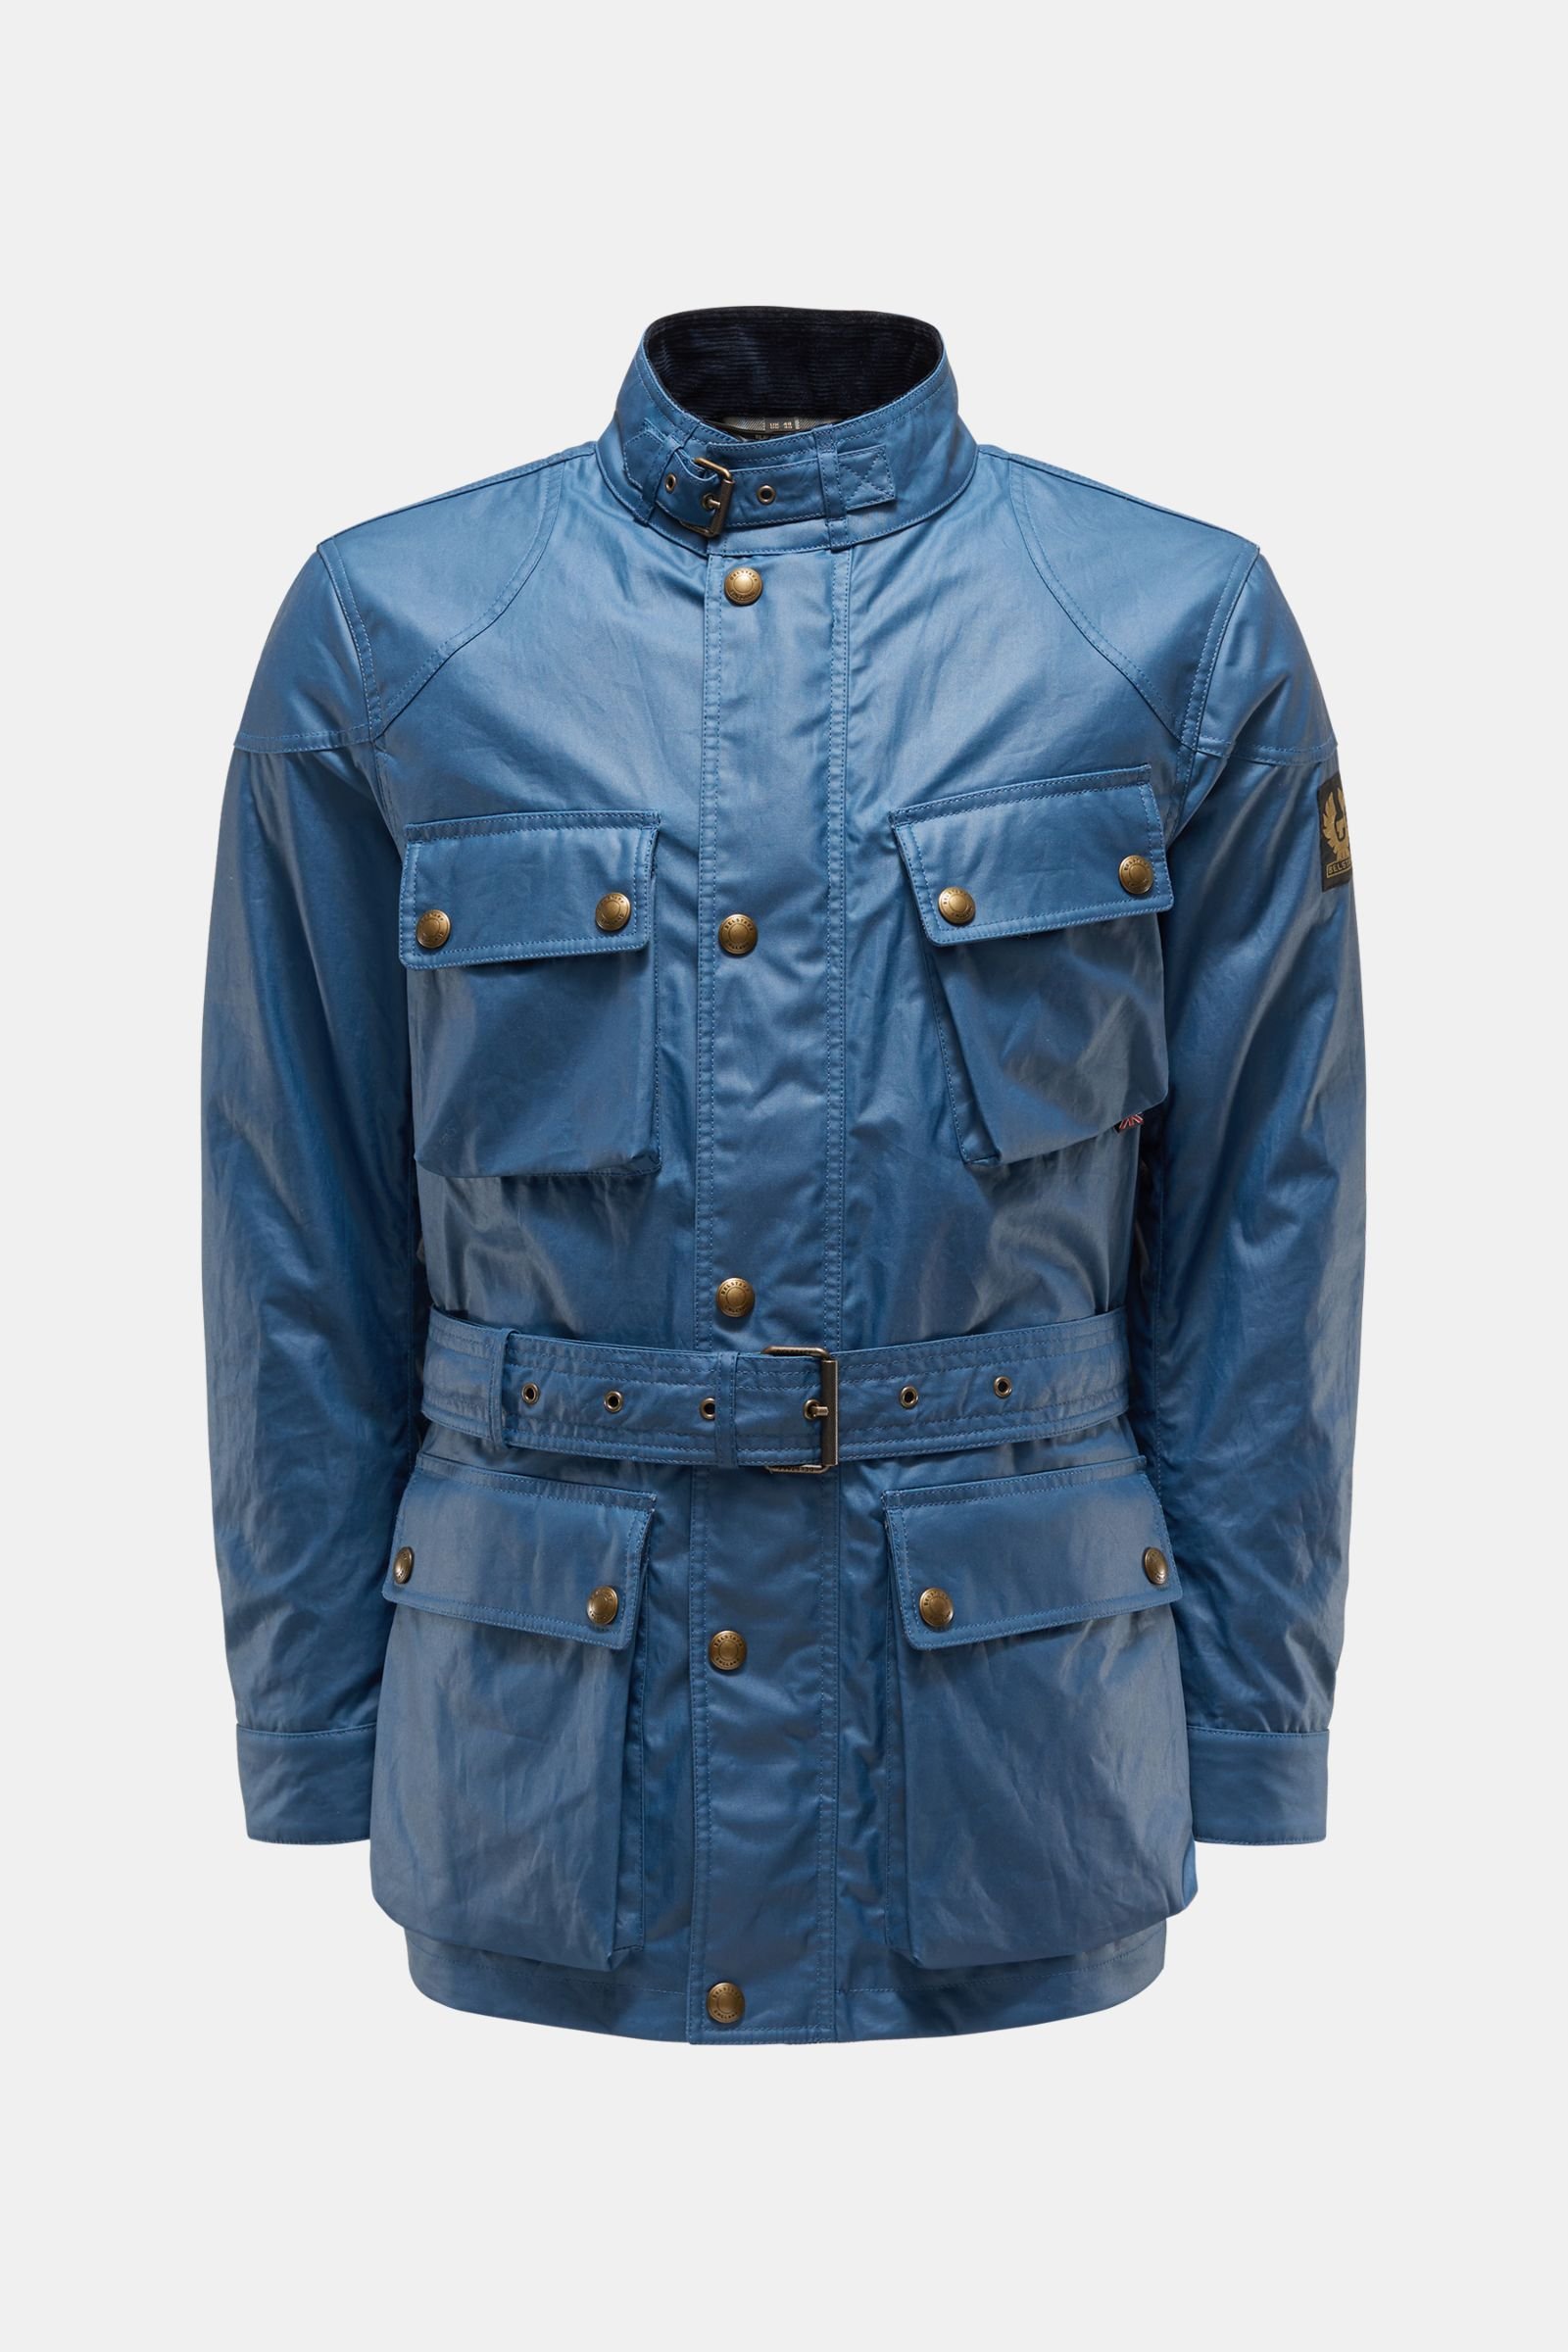 BELSTAFF wax jacket 'Trialmaster' blue 